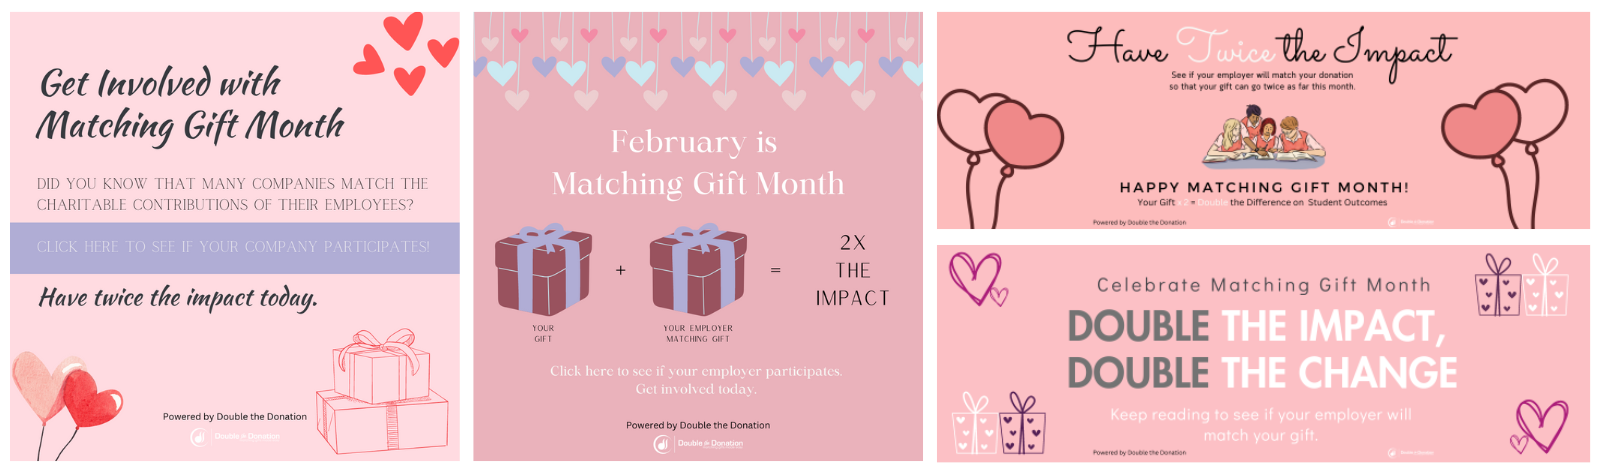 Sample Matching Gift Month posts